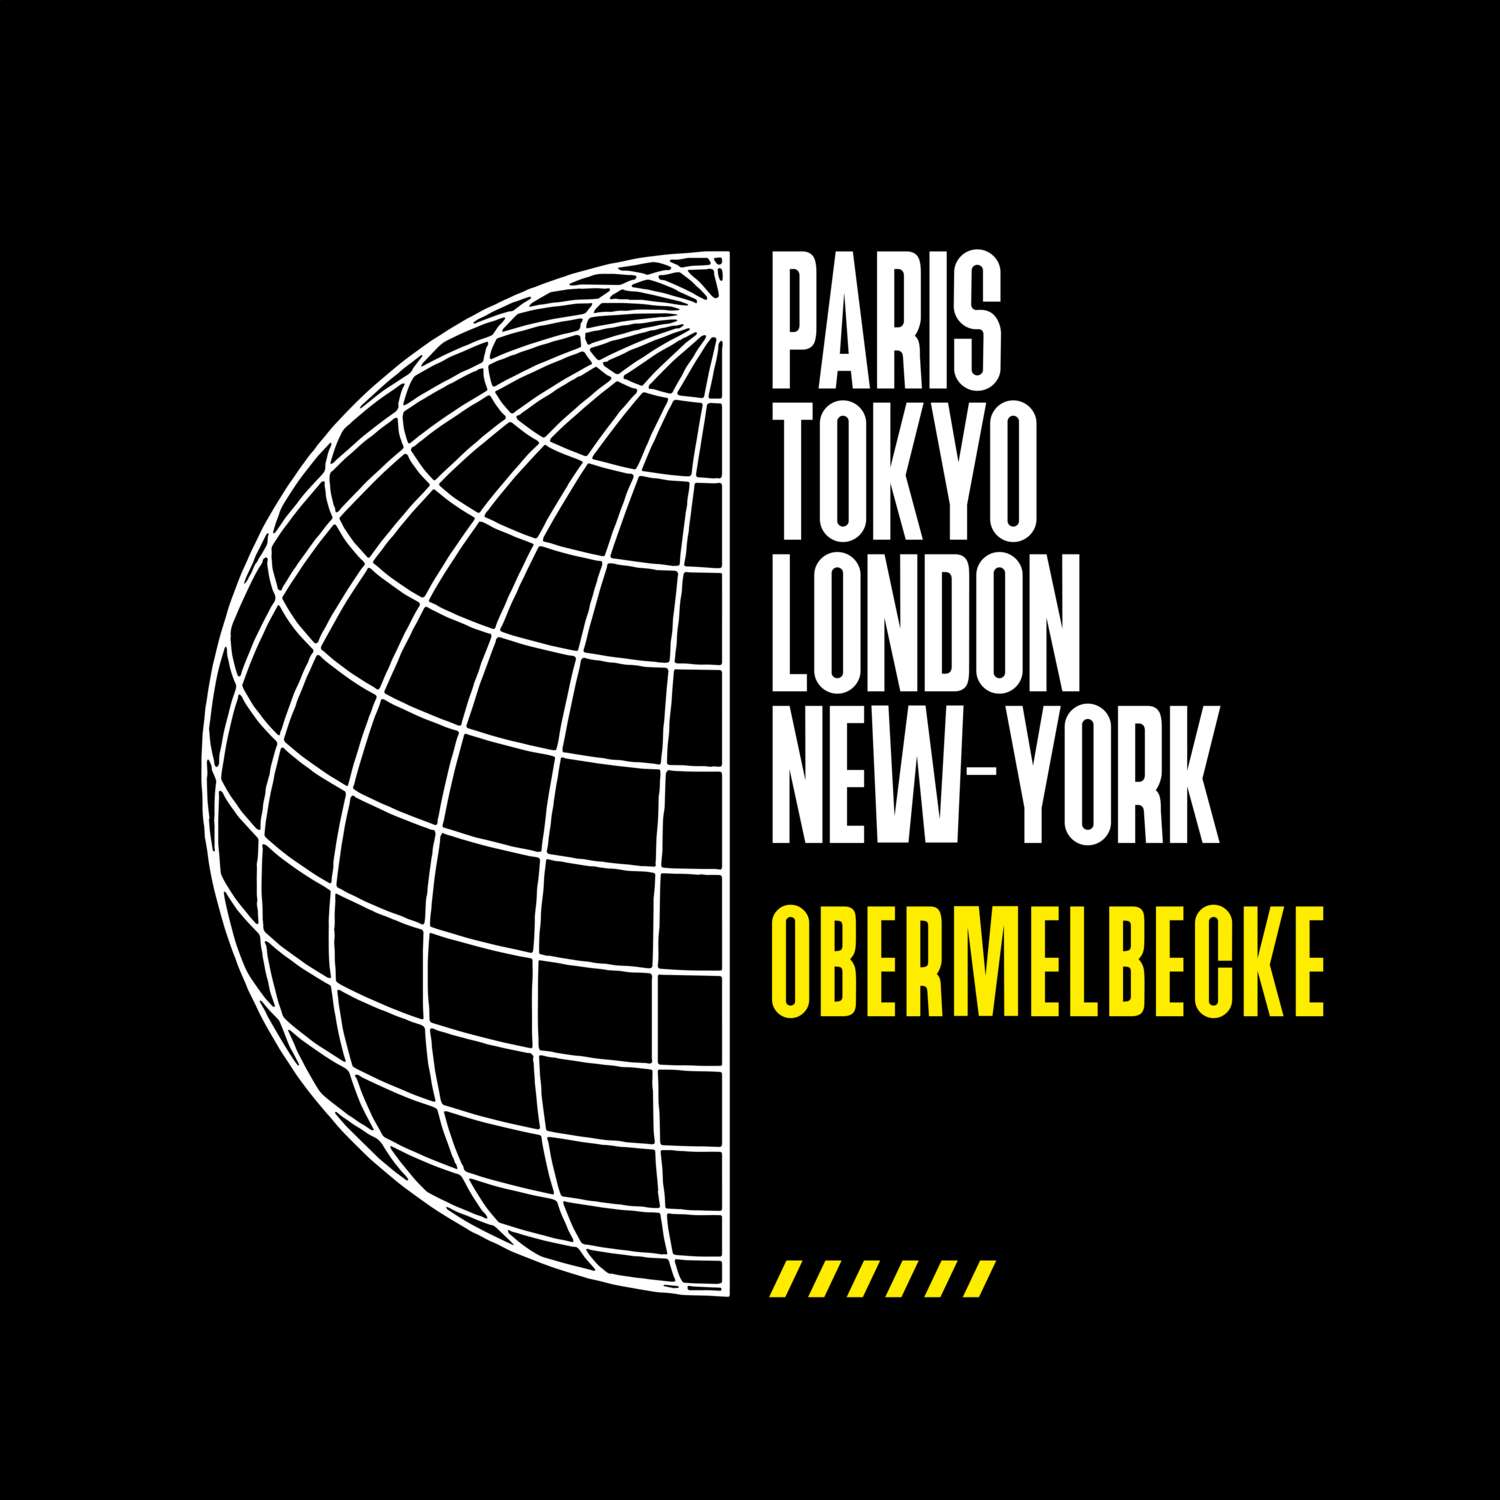 Obermelbecke T-Shirt »Paris Tokyo London«